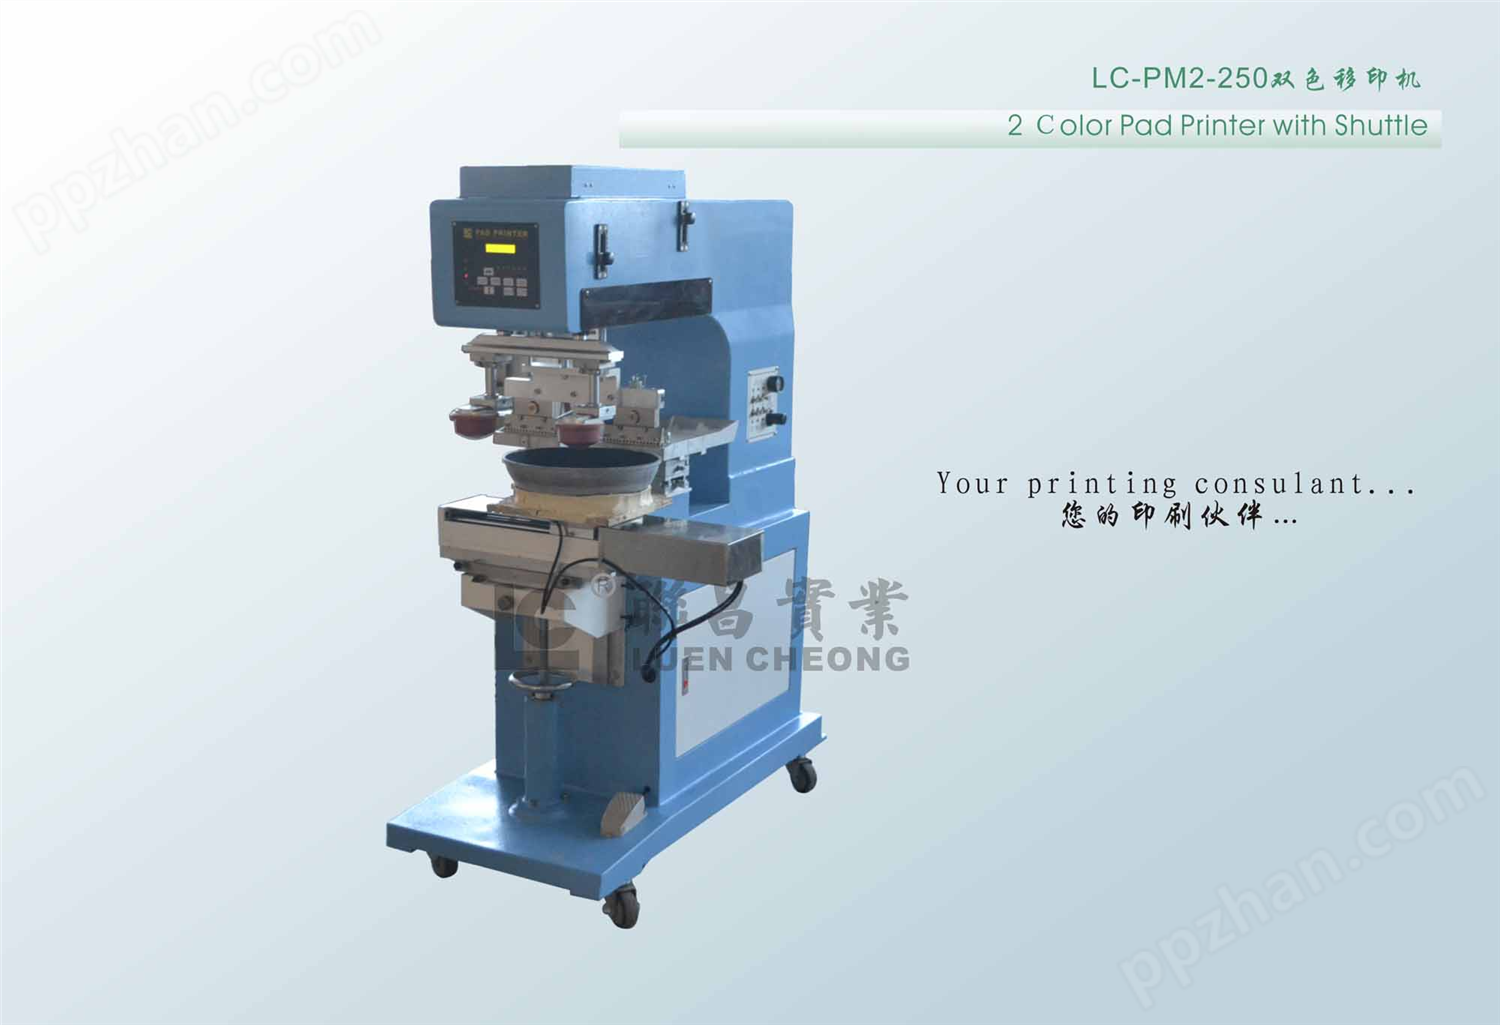 LC-PM2-250 双色穿梭移印机